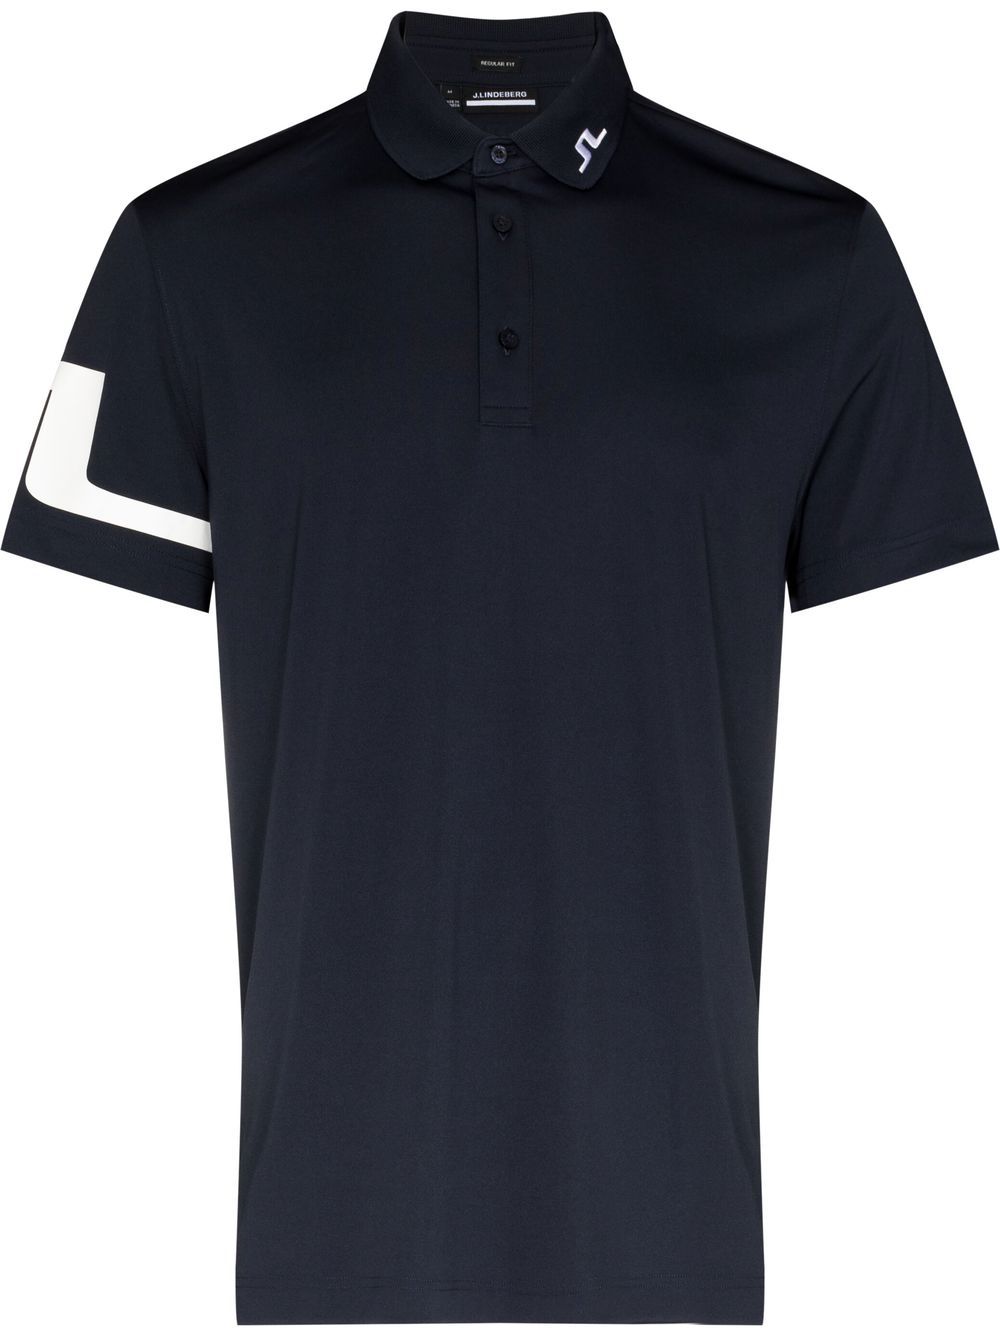 Heath Golf polo shirt